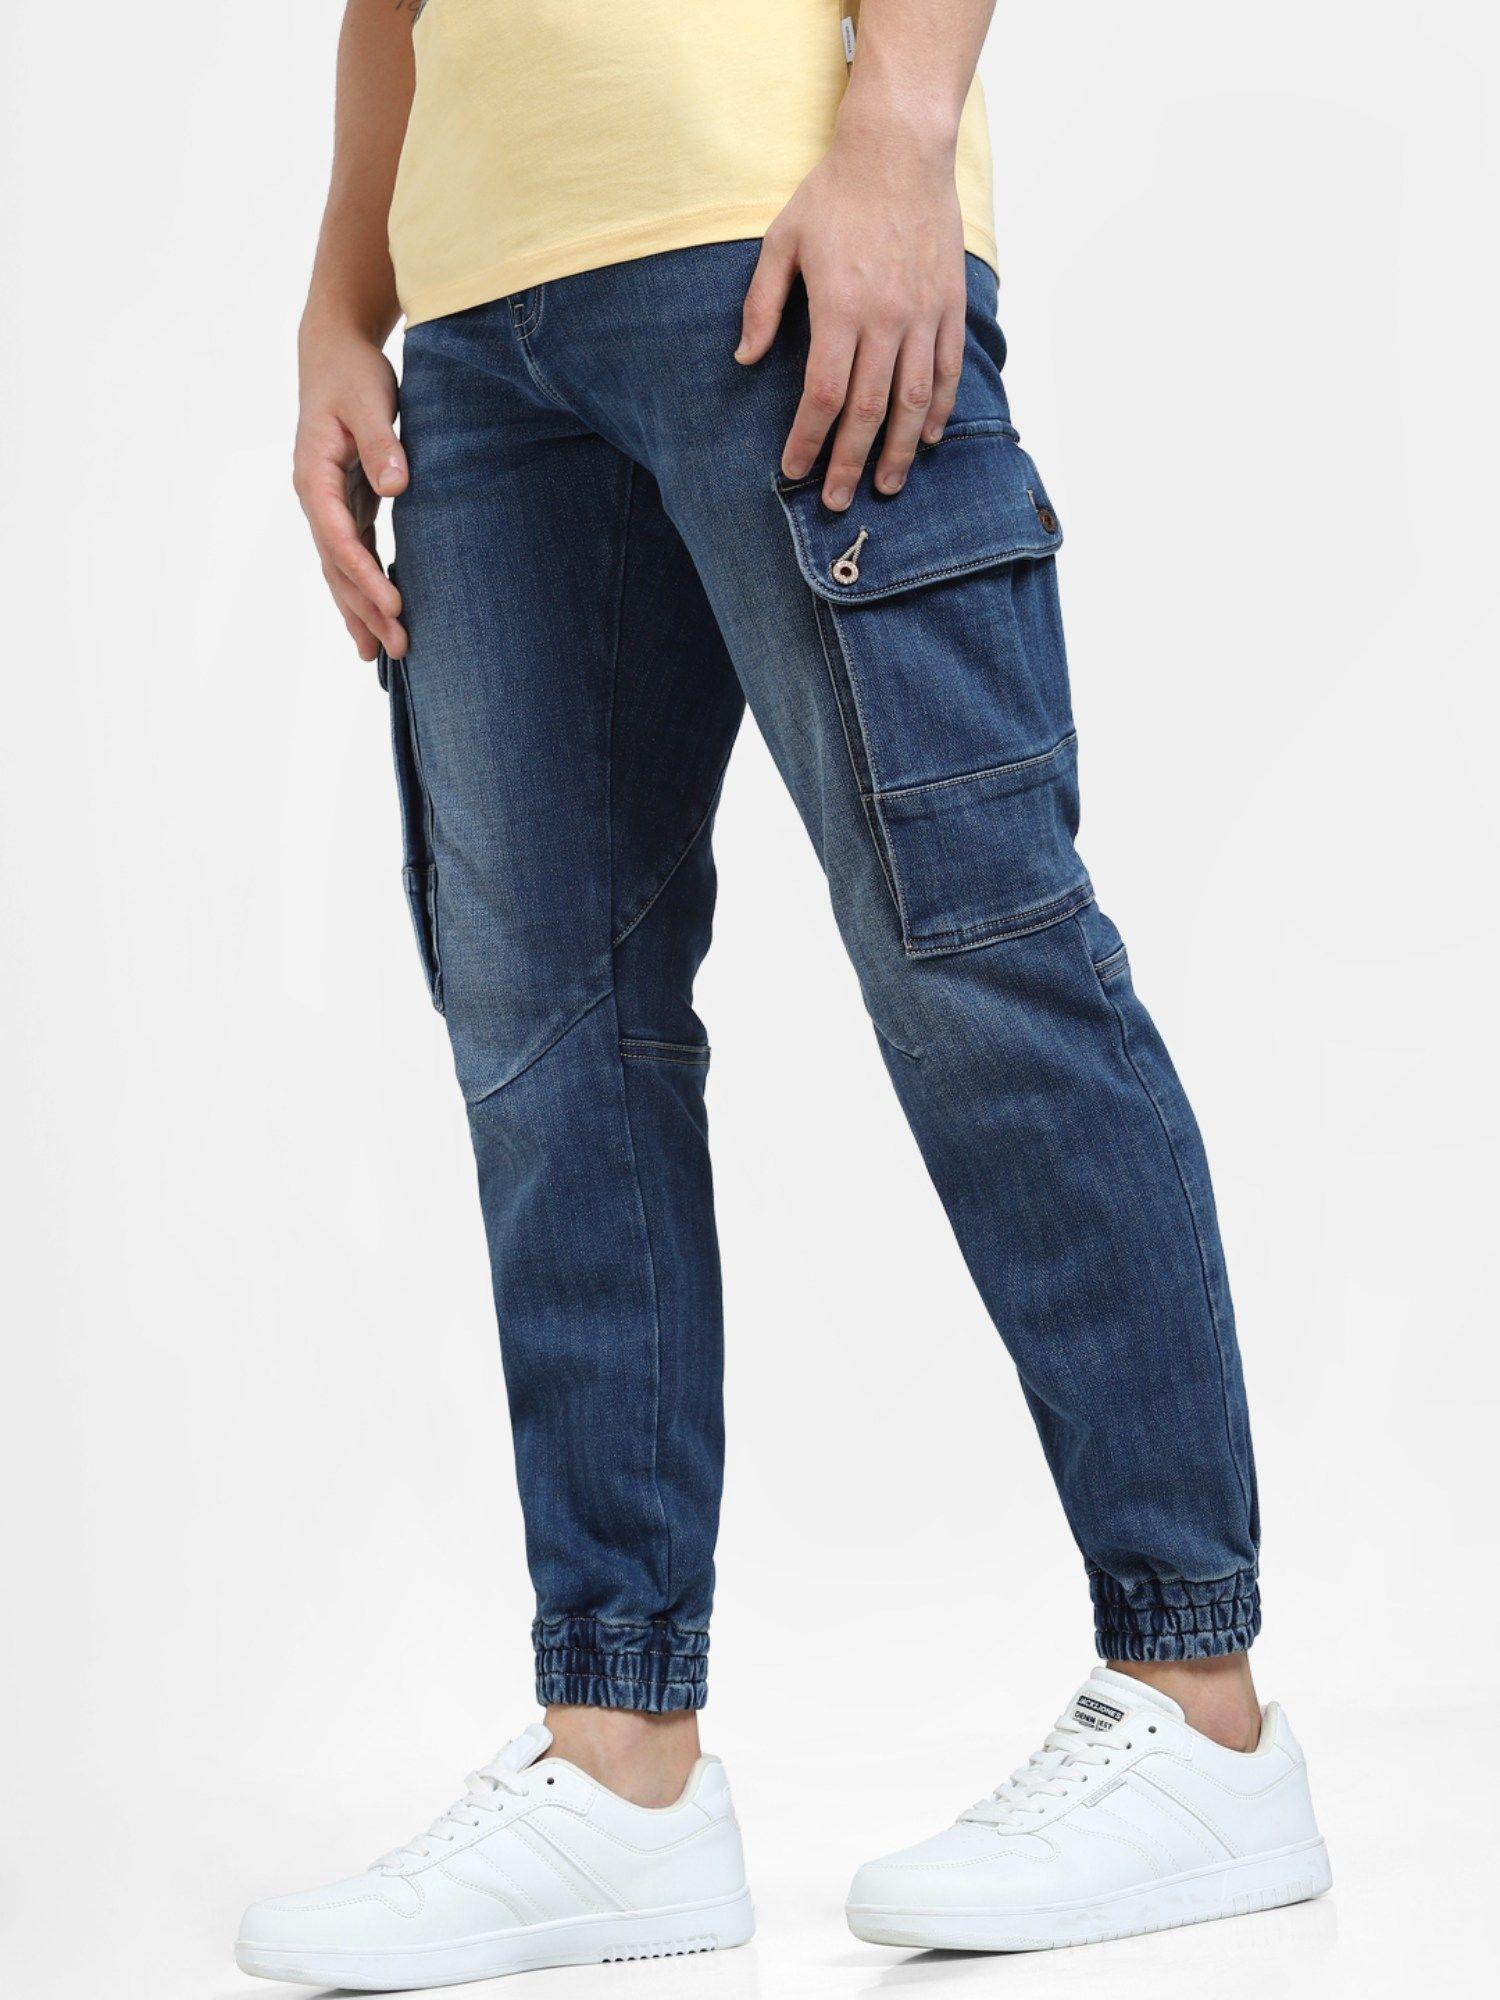 men-solid-blue-jeans